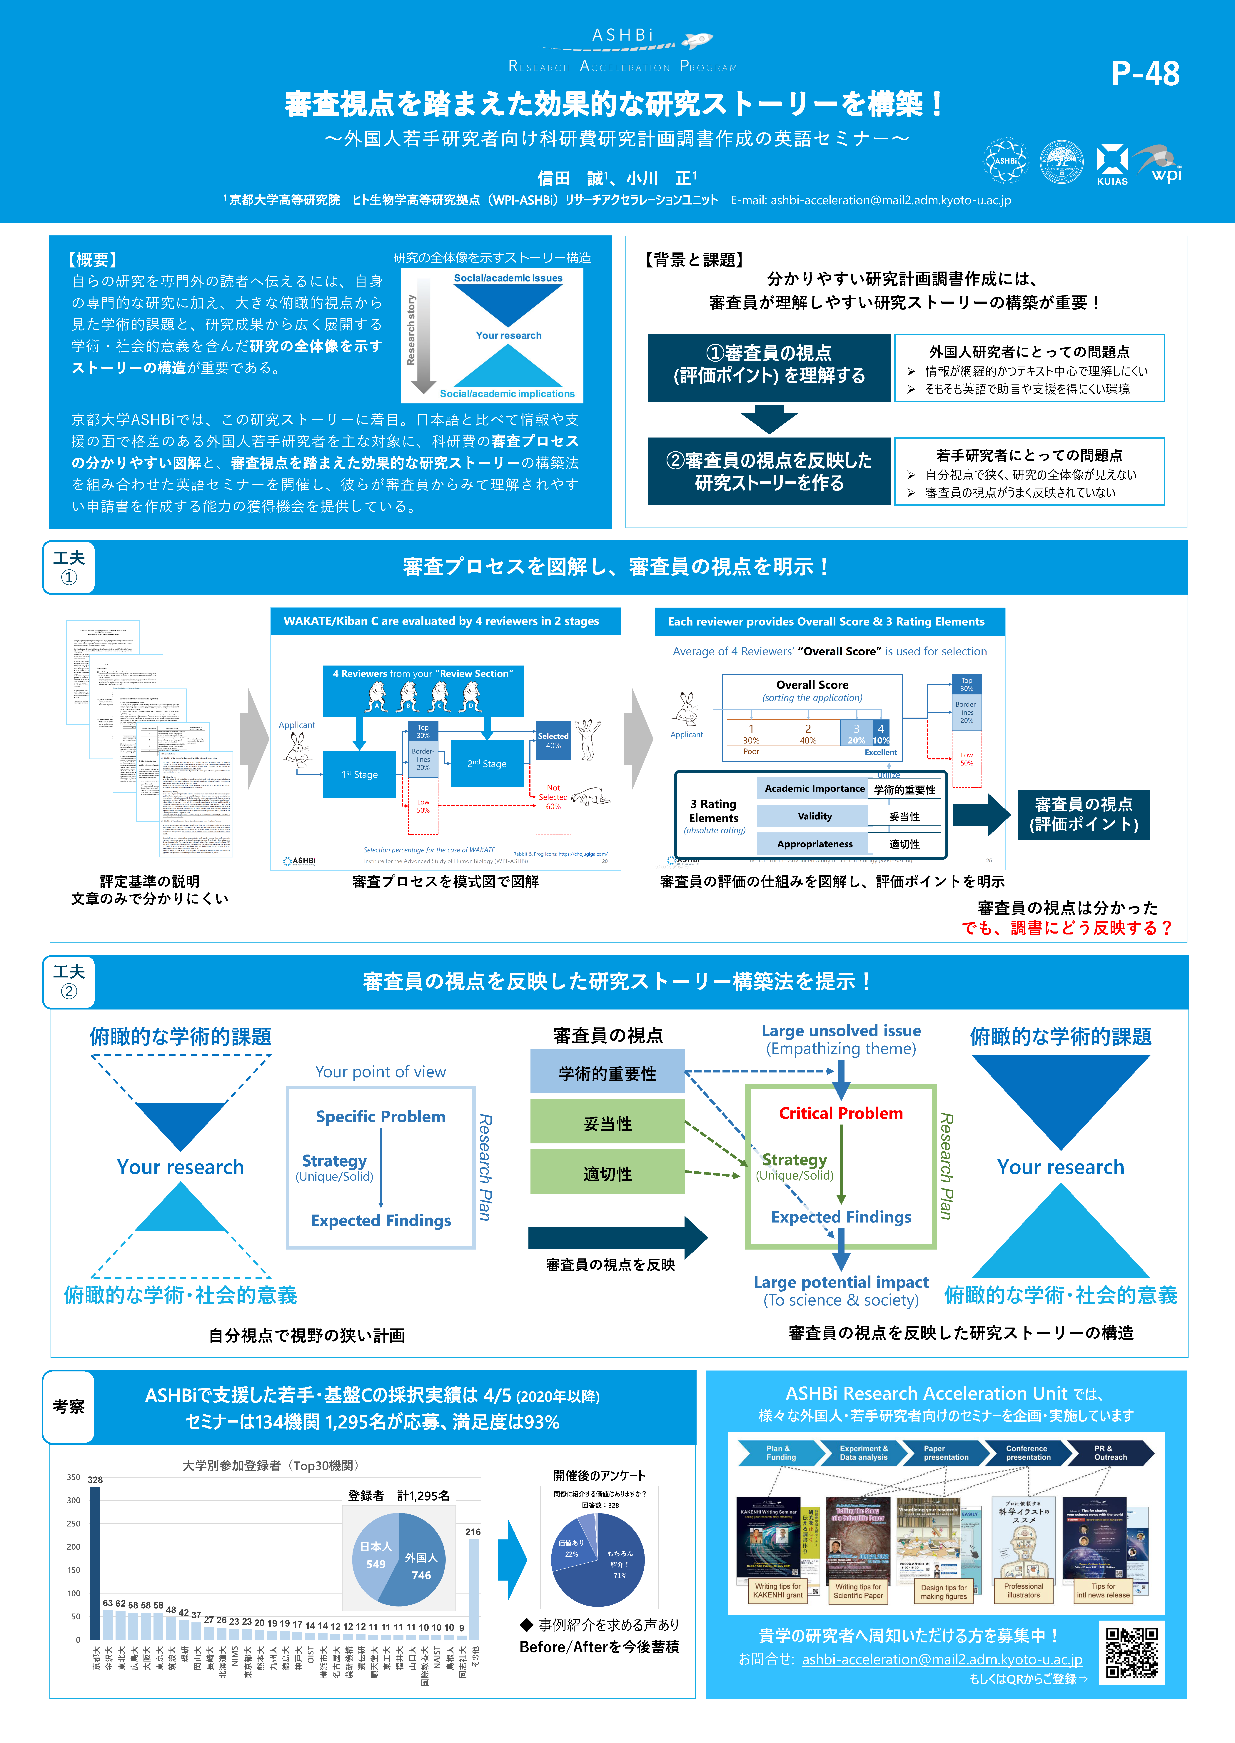 Makoto Shida’s poster presentation (content in Japanese)